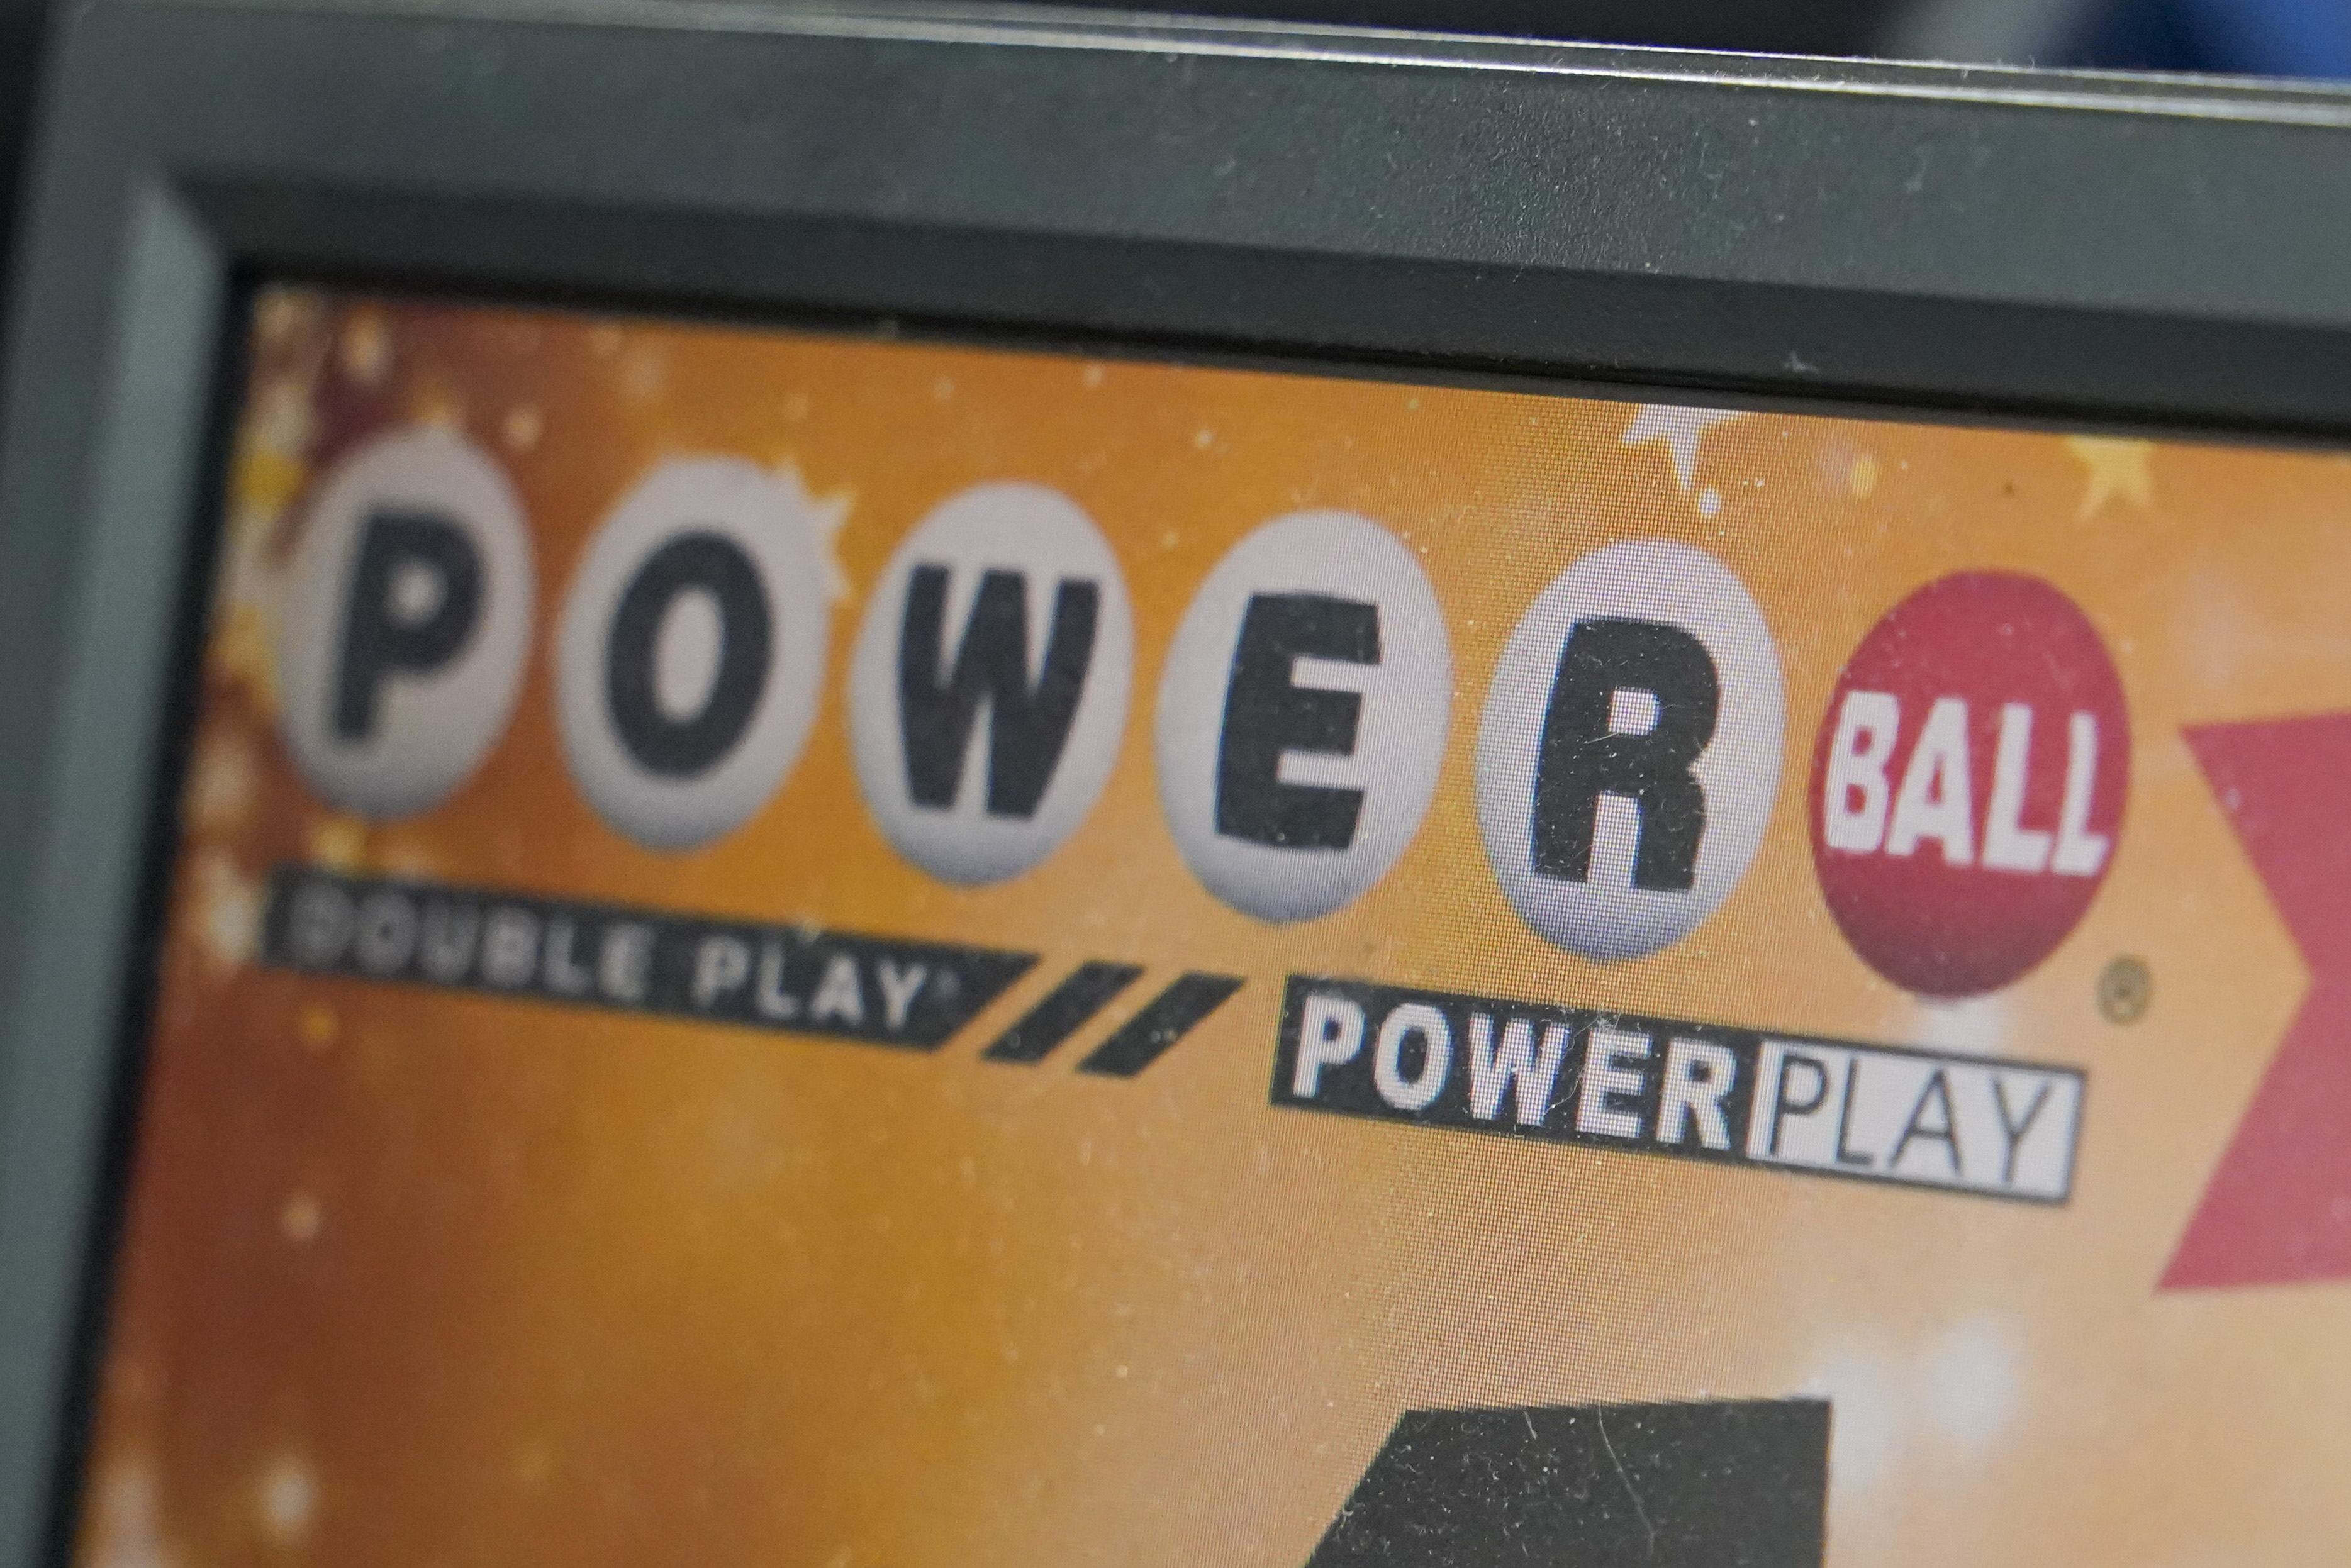 Pennsylvania Lottery - Scratch-Offs - $1,000,000 Cash Corner$